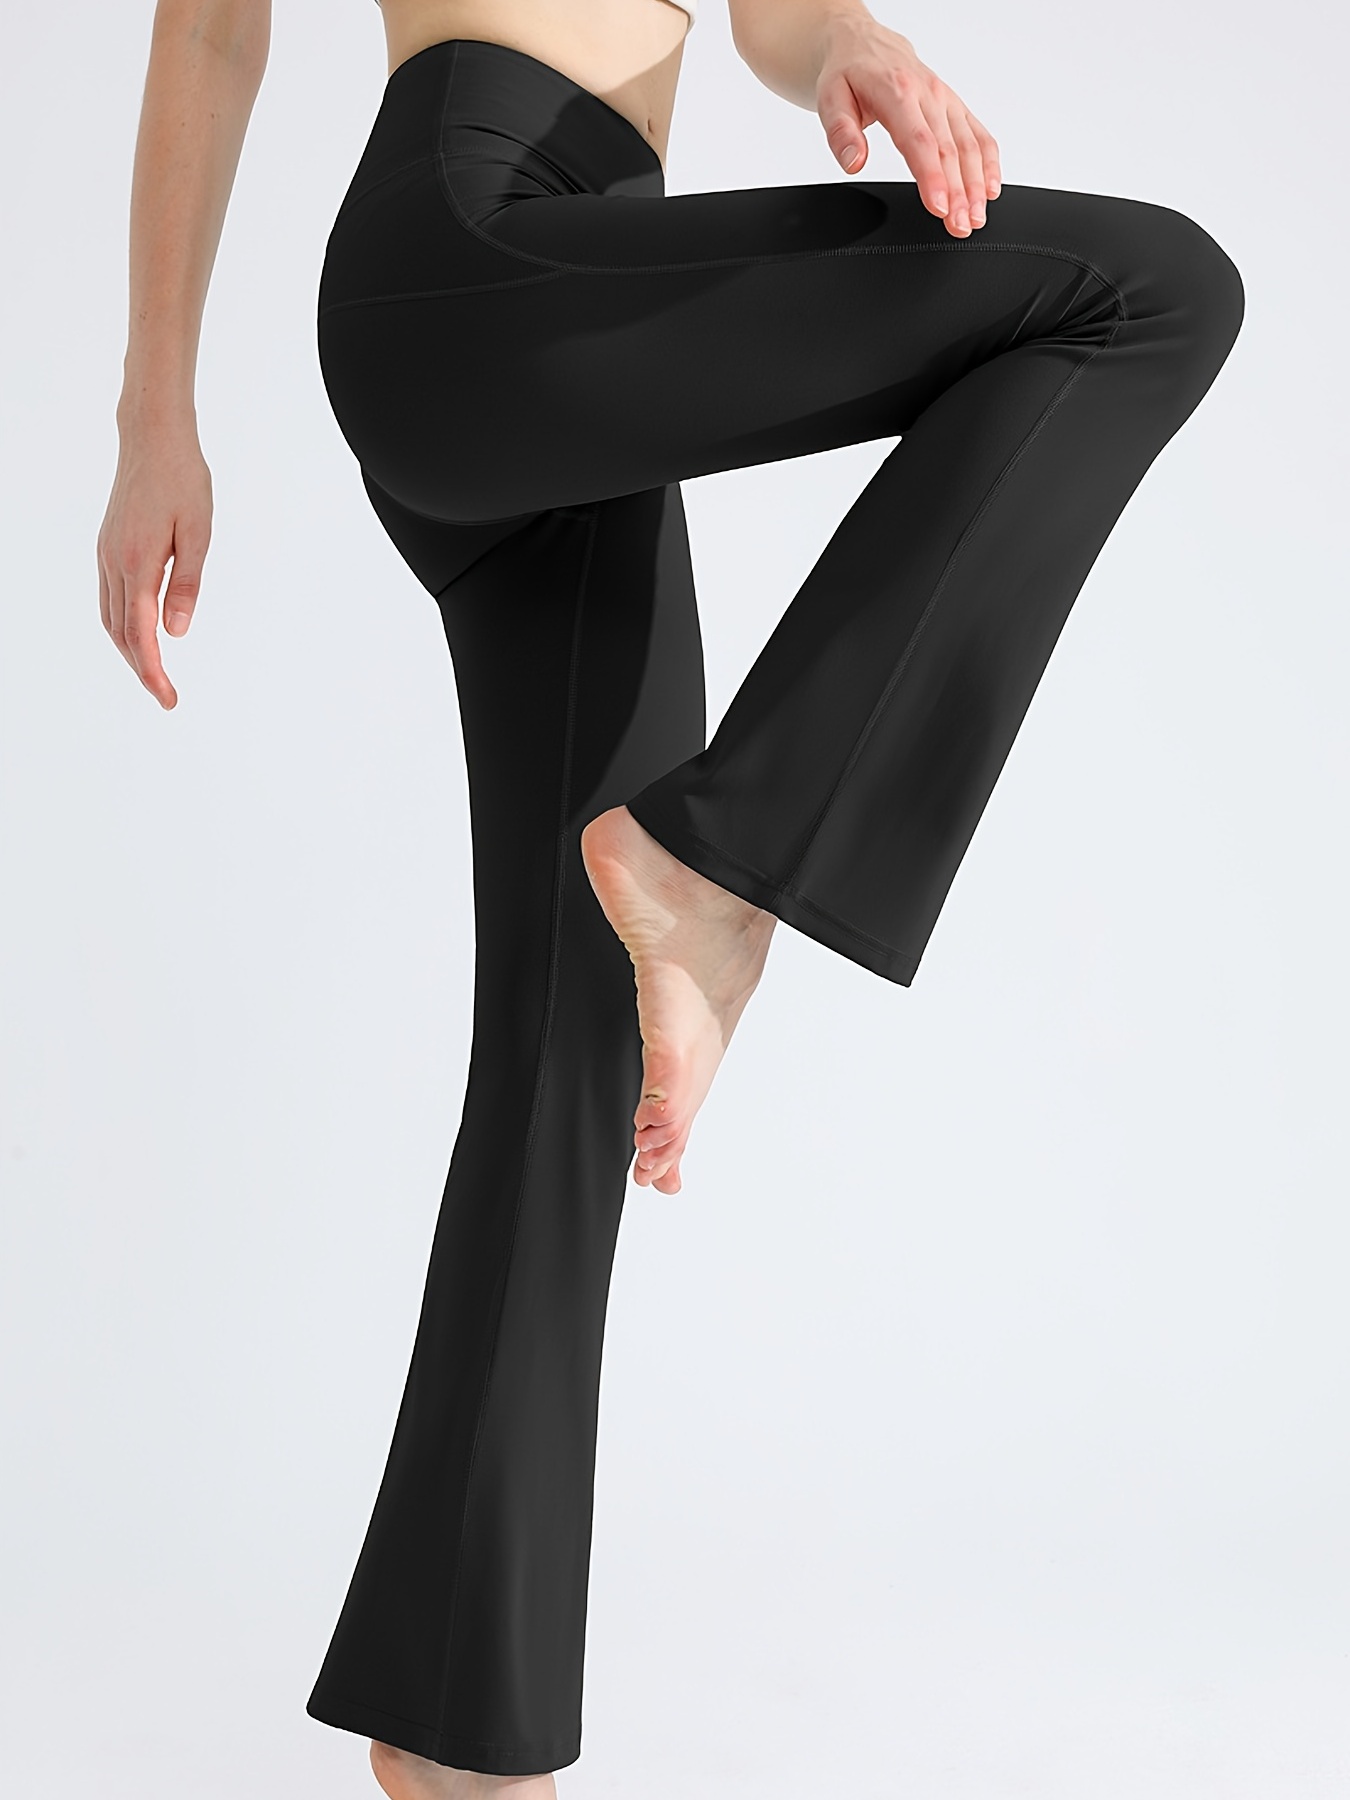 Victoria’s Secret yoga pants, flare bottoms, black